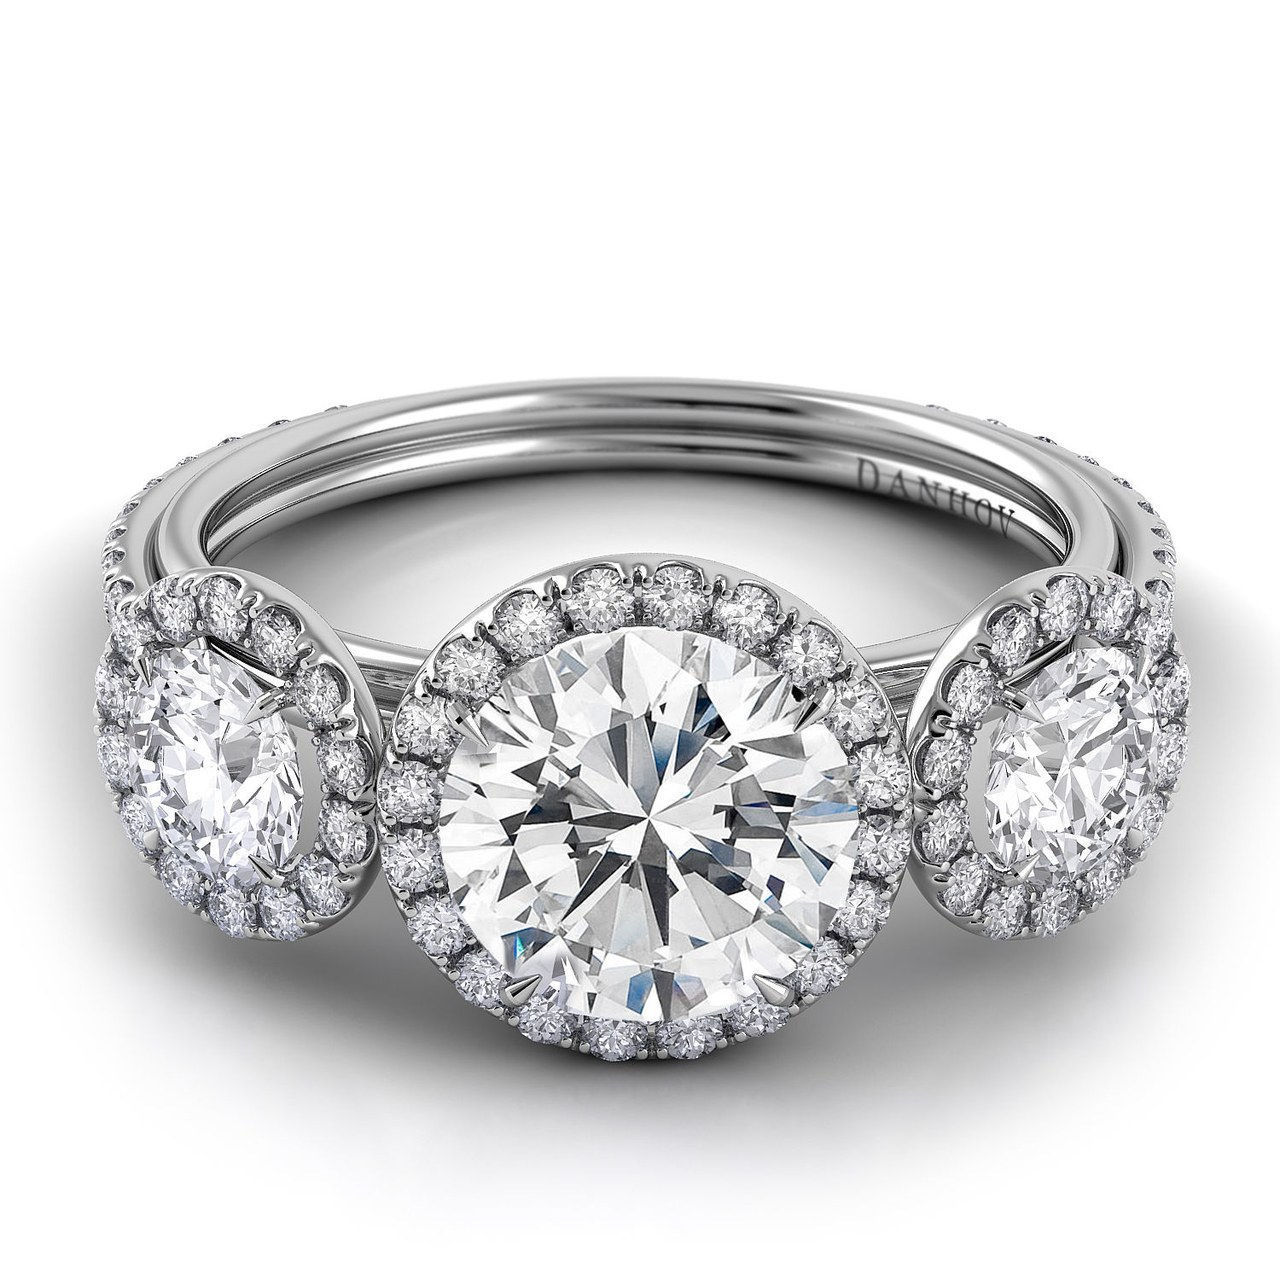 3 perrie edwards engagement ring zayn malik one direction celebrity weddings